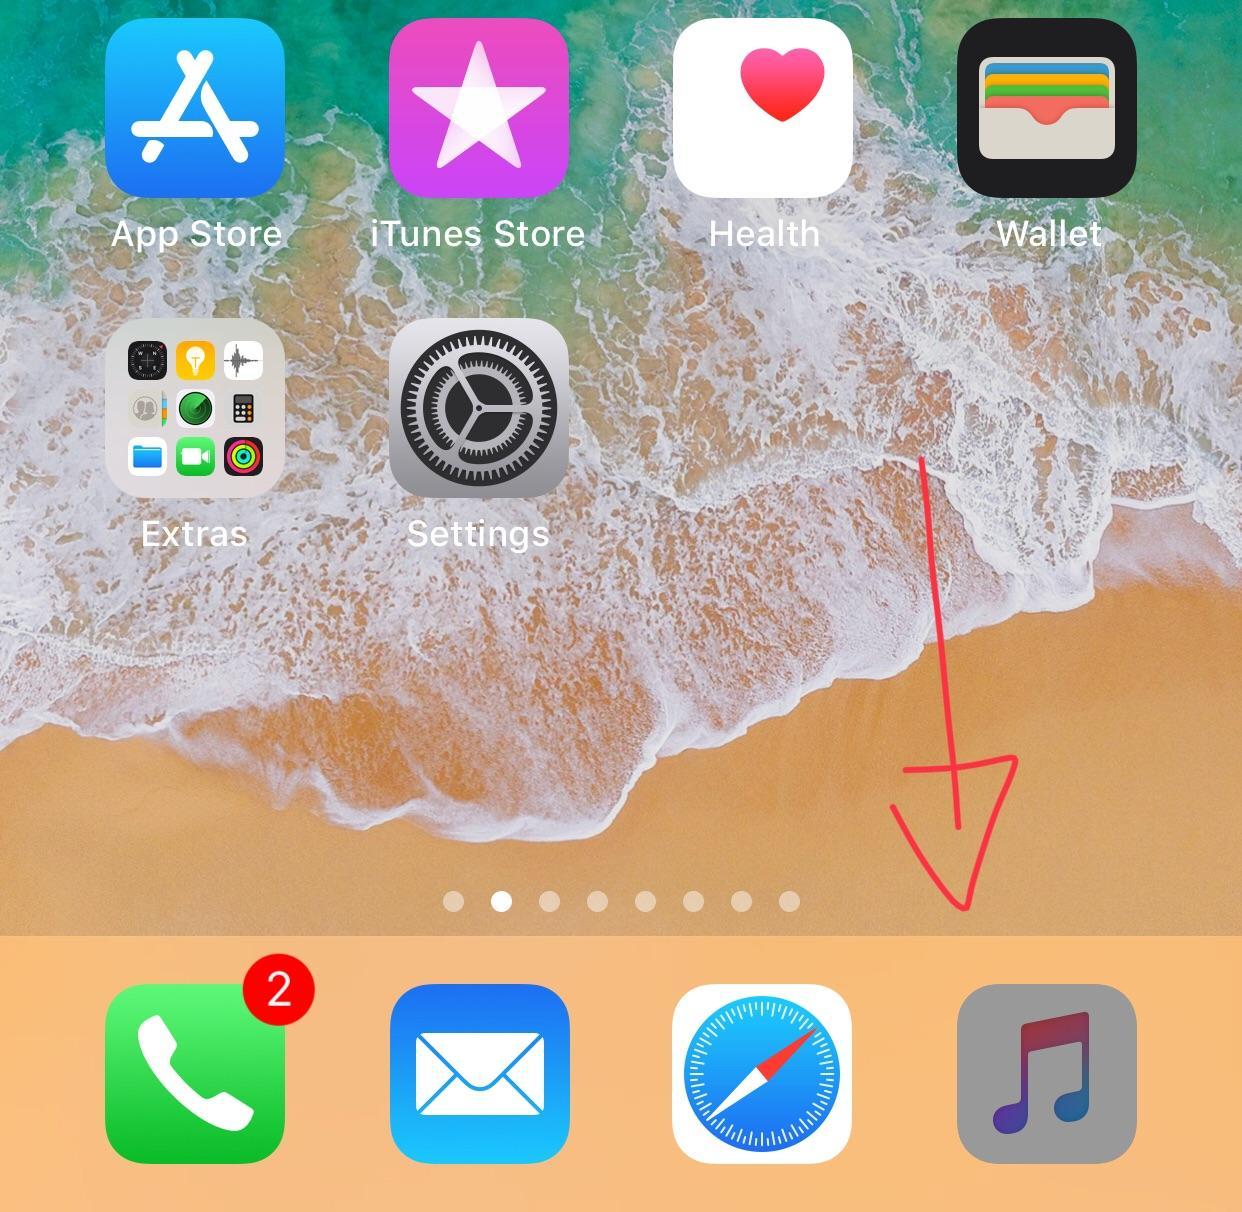 Safari App Logo - Why does music app icon go dark? happens with safari too